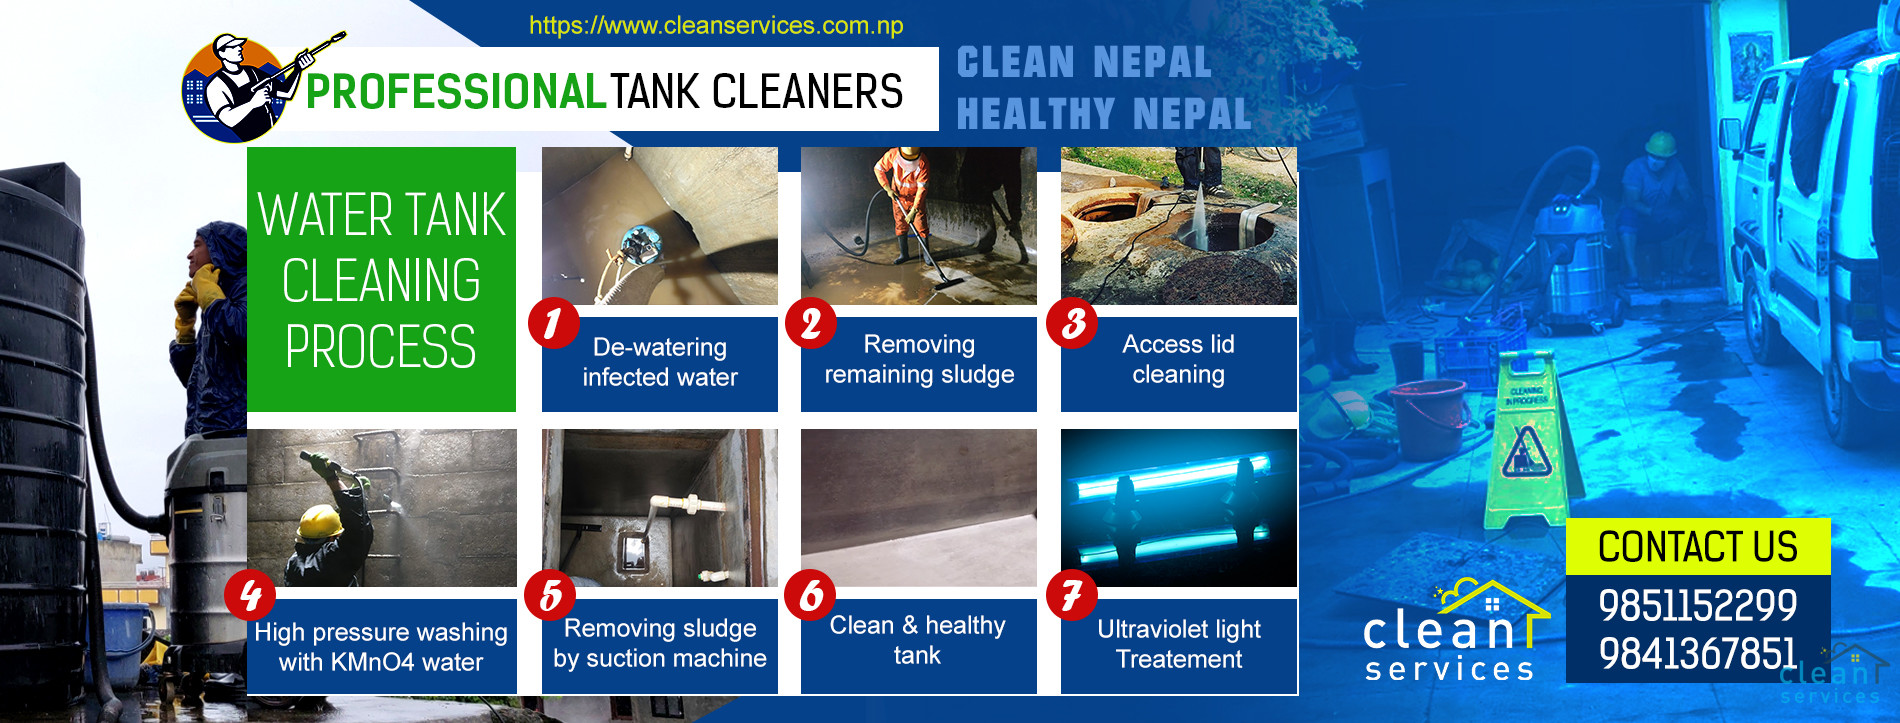 Professional water tank cleaners - Kathmandu, Nepal